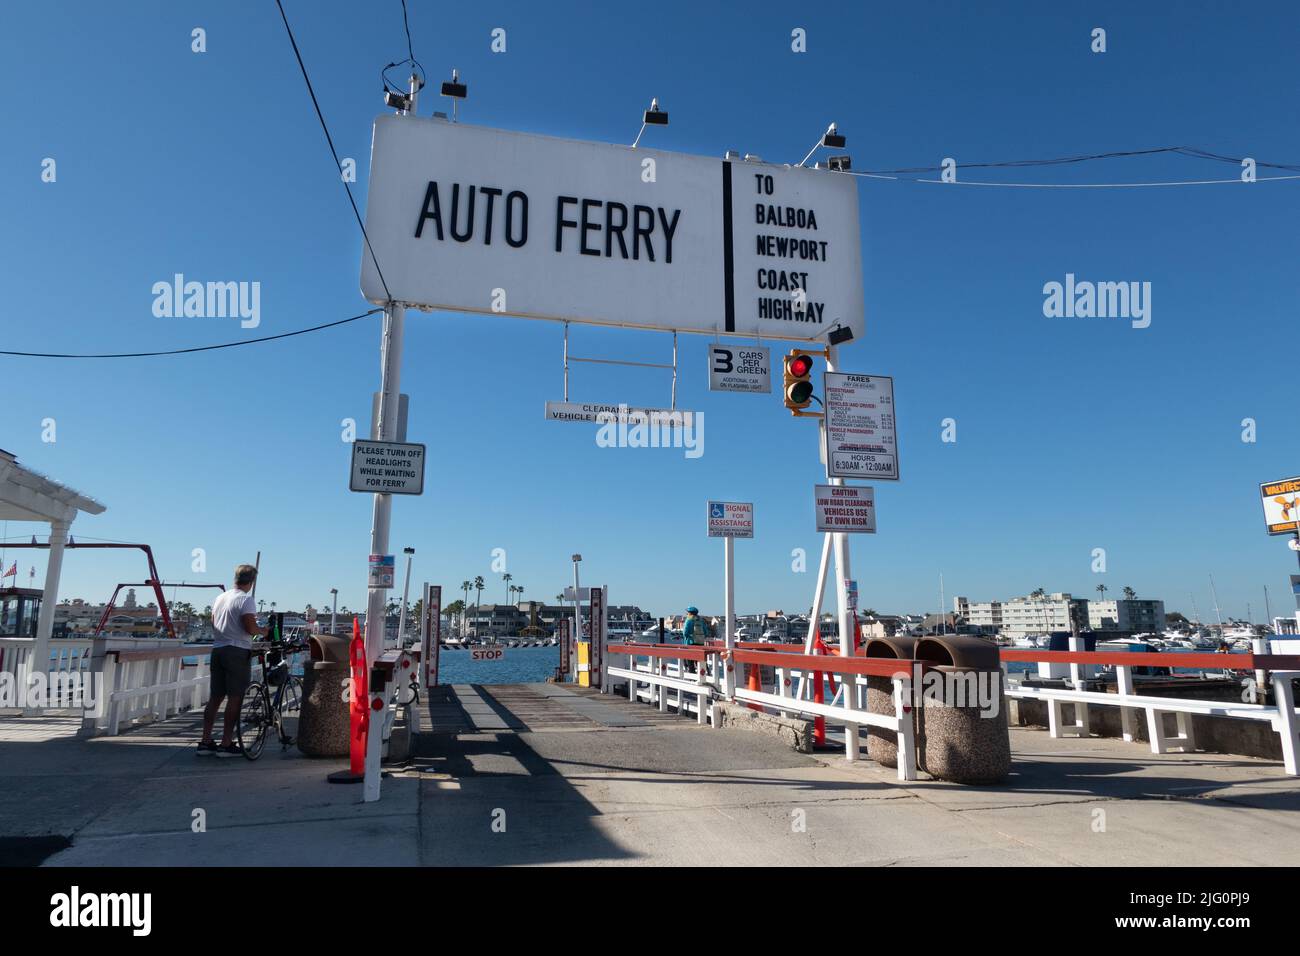 Old fashioned Small car ferry entrance on Balboa Island Newport beach Southern california USA Stock Photo